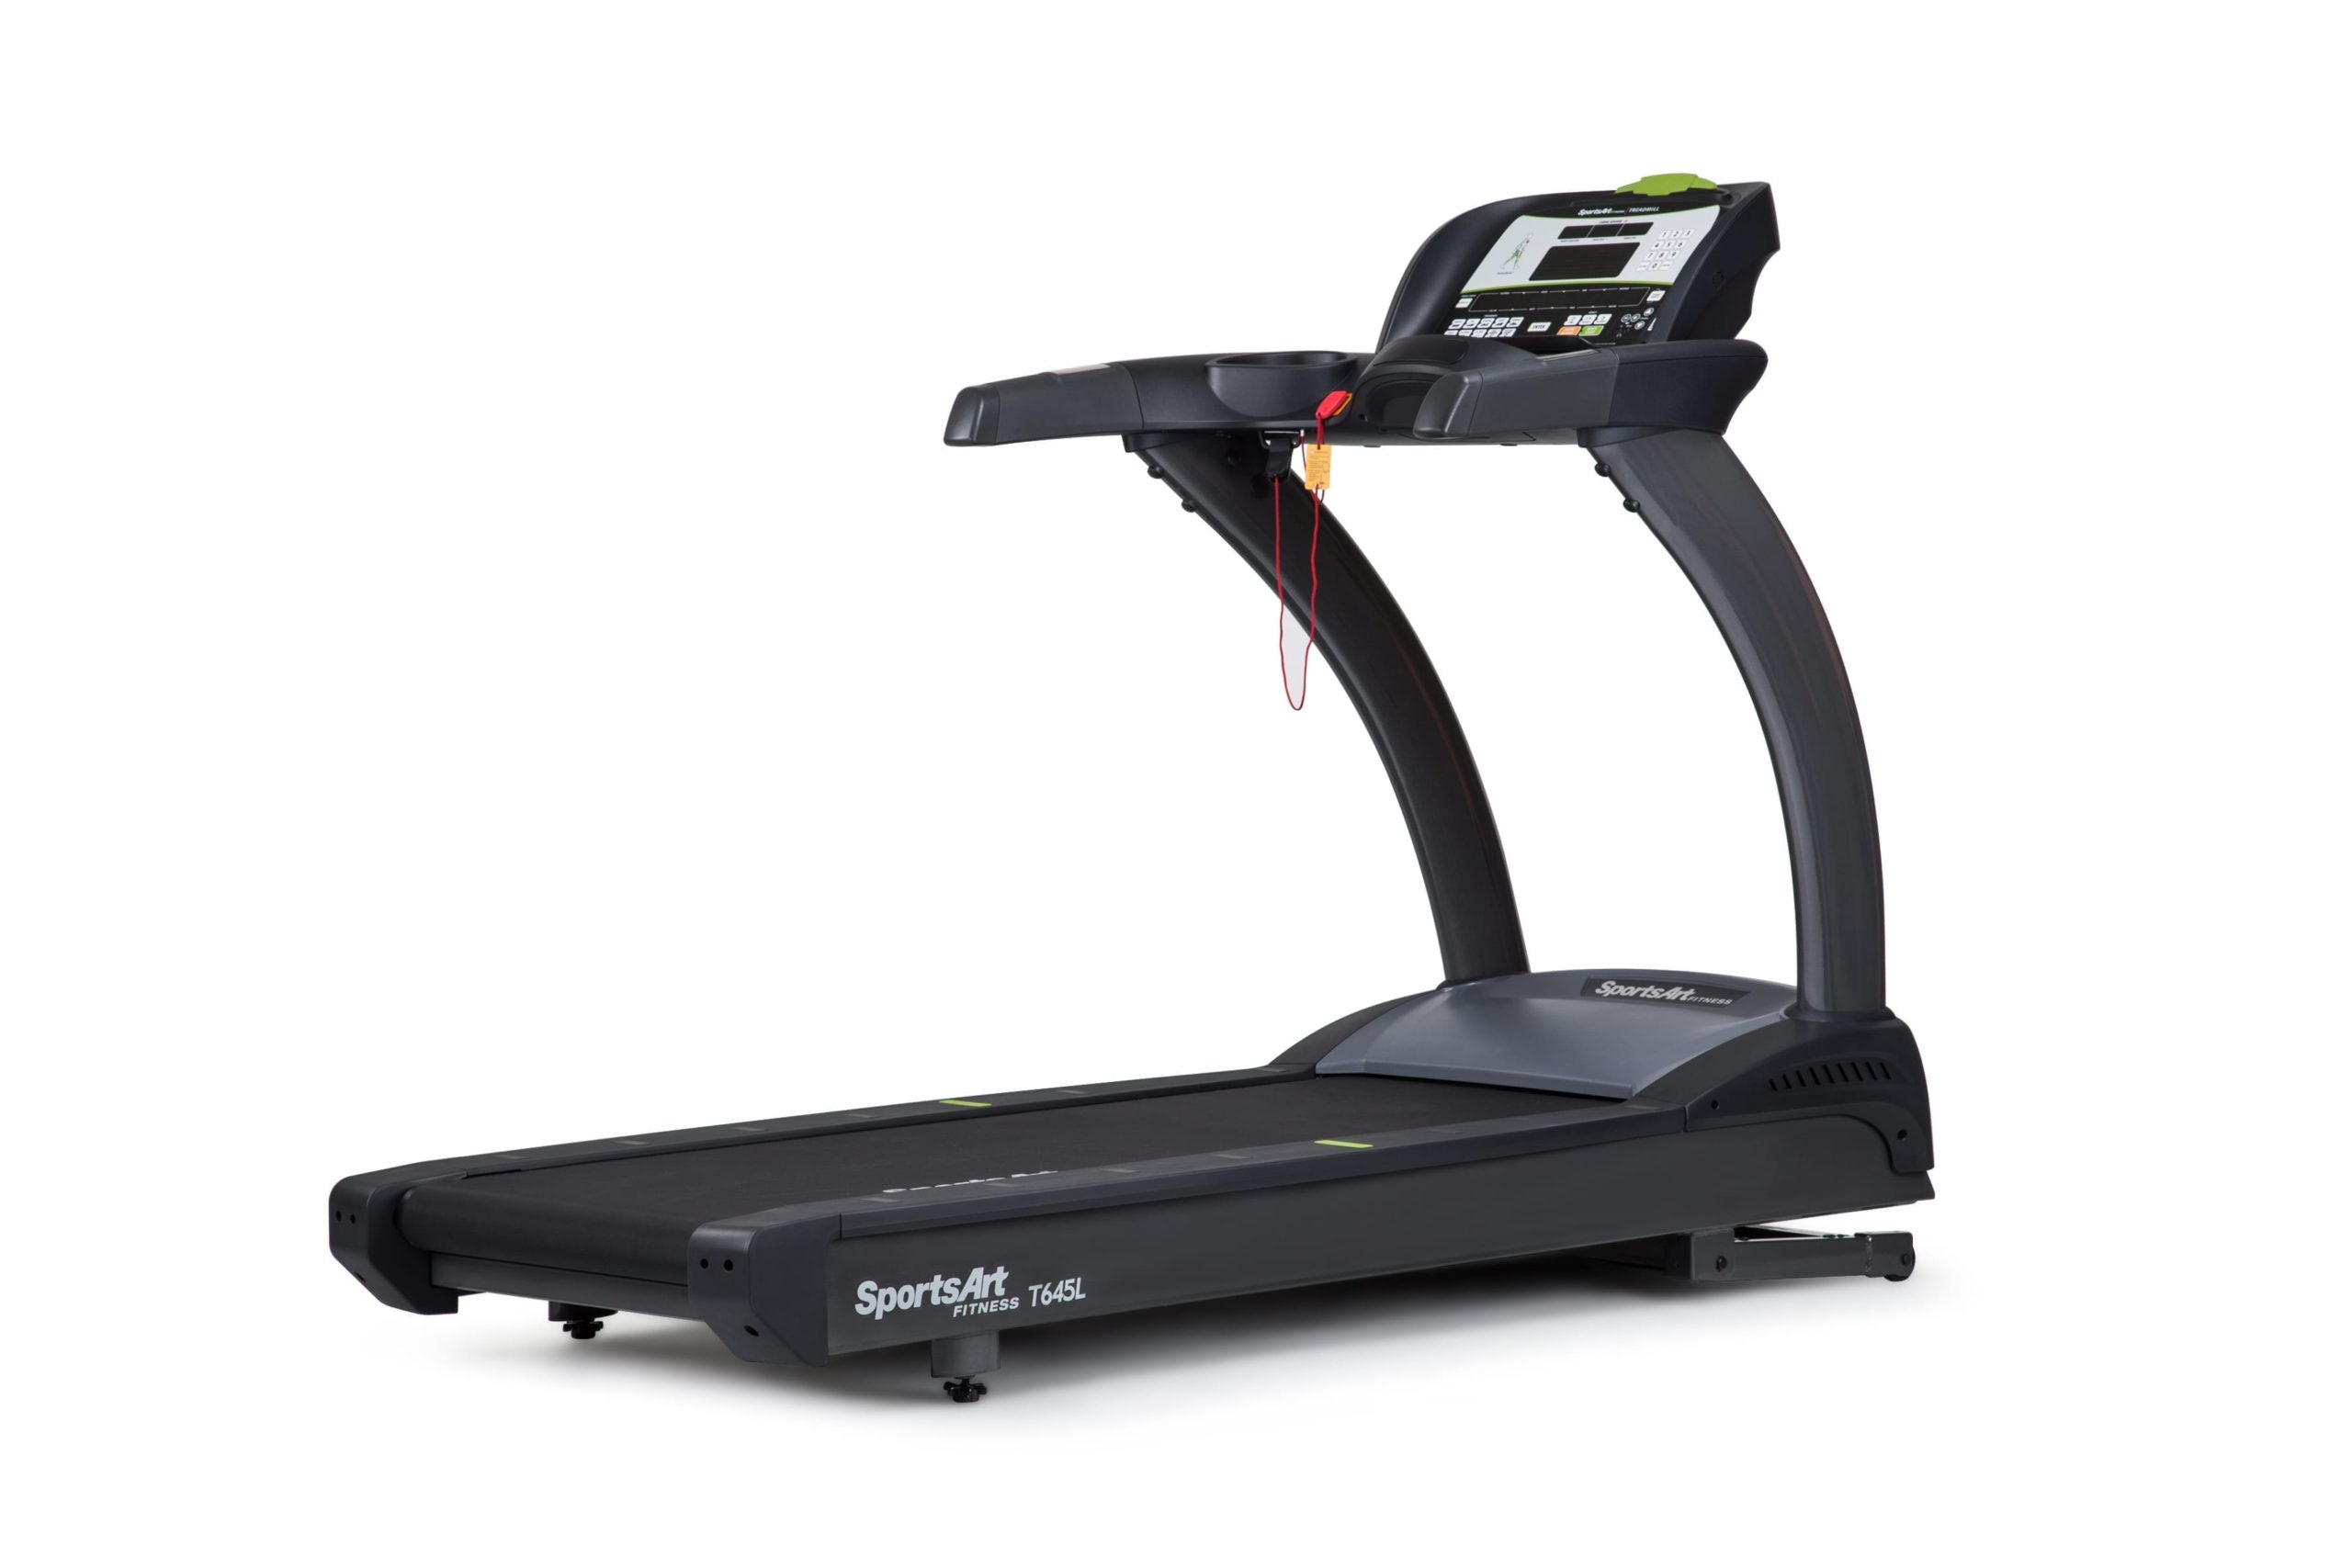 Details about   Treadmill Running Belts SportsArt T645 Treadmill Belt 